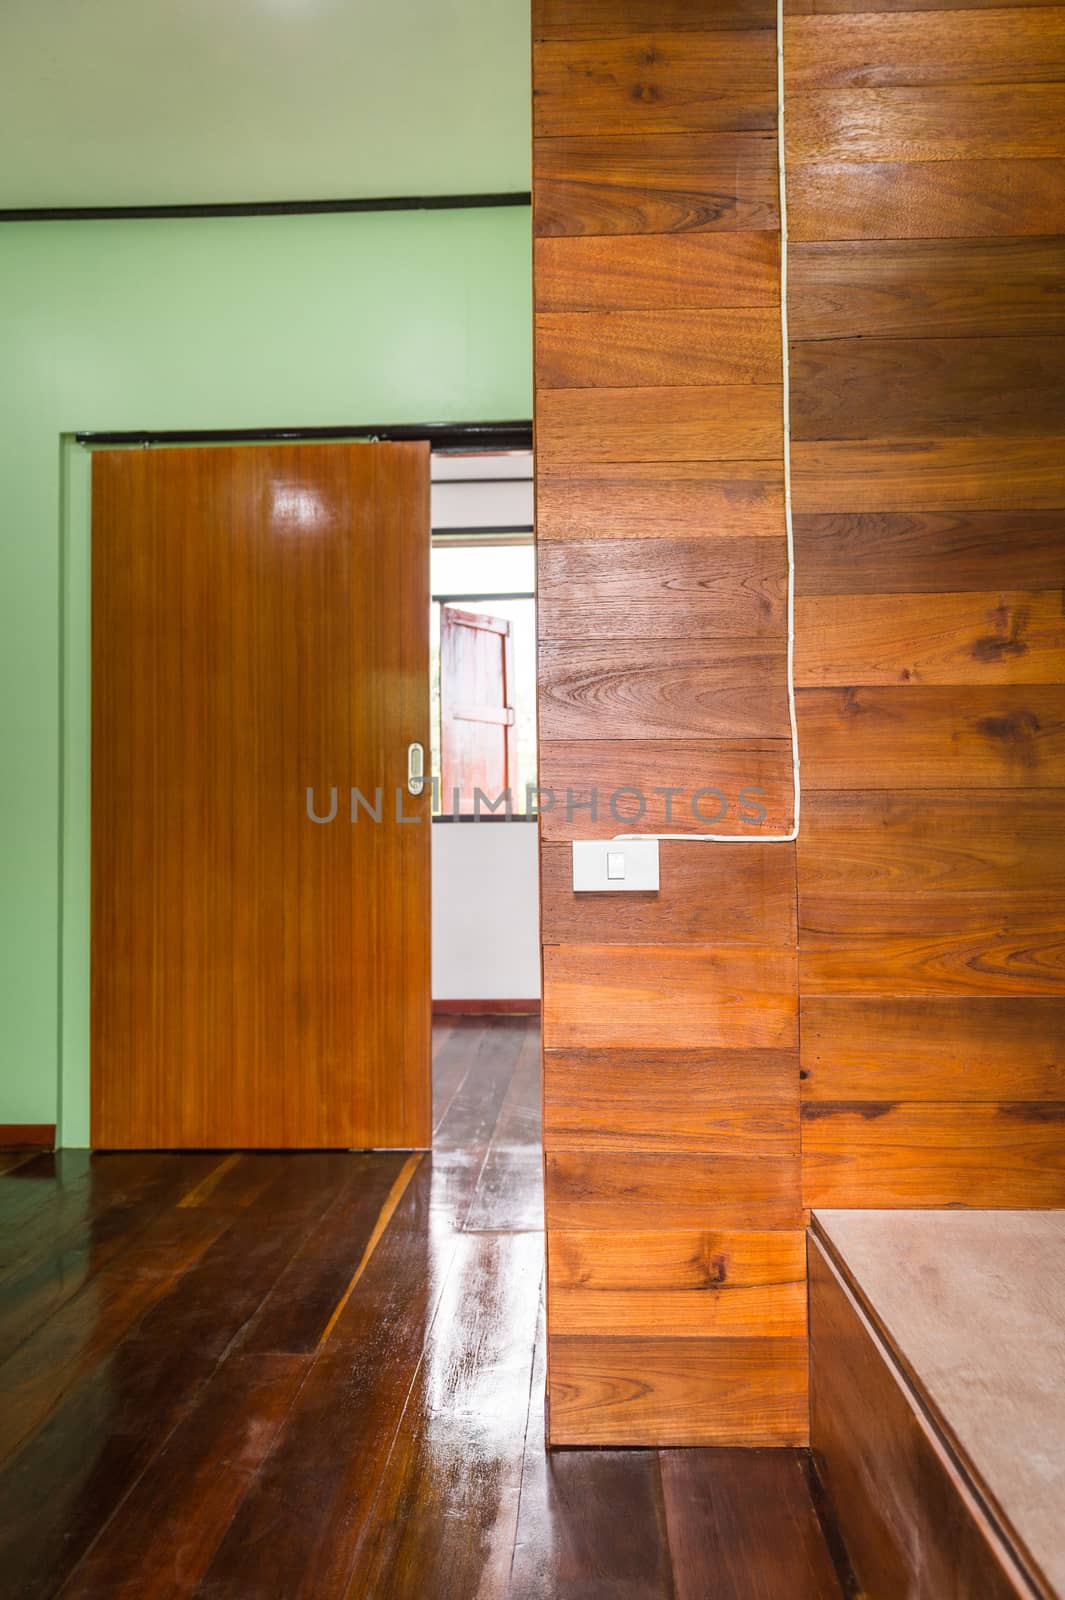 wood door and wood wall of interior room design